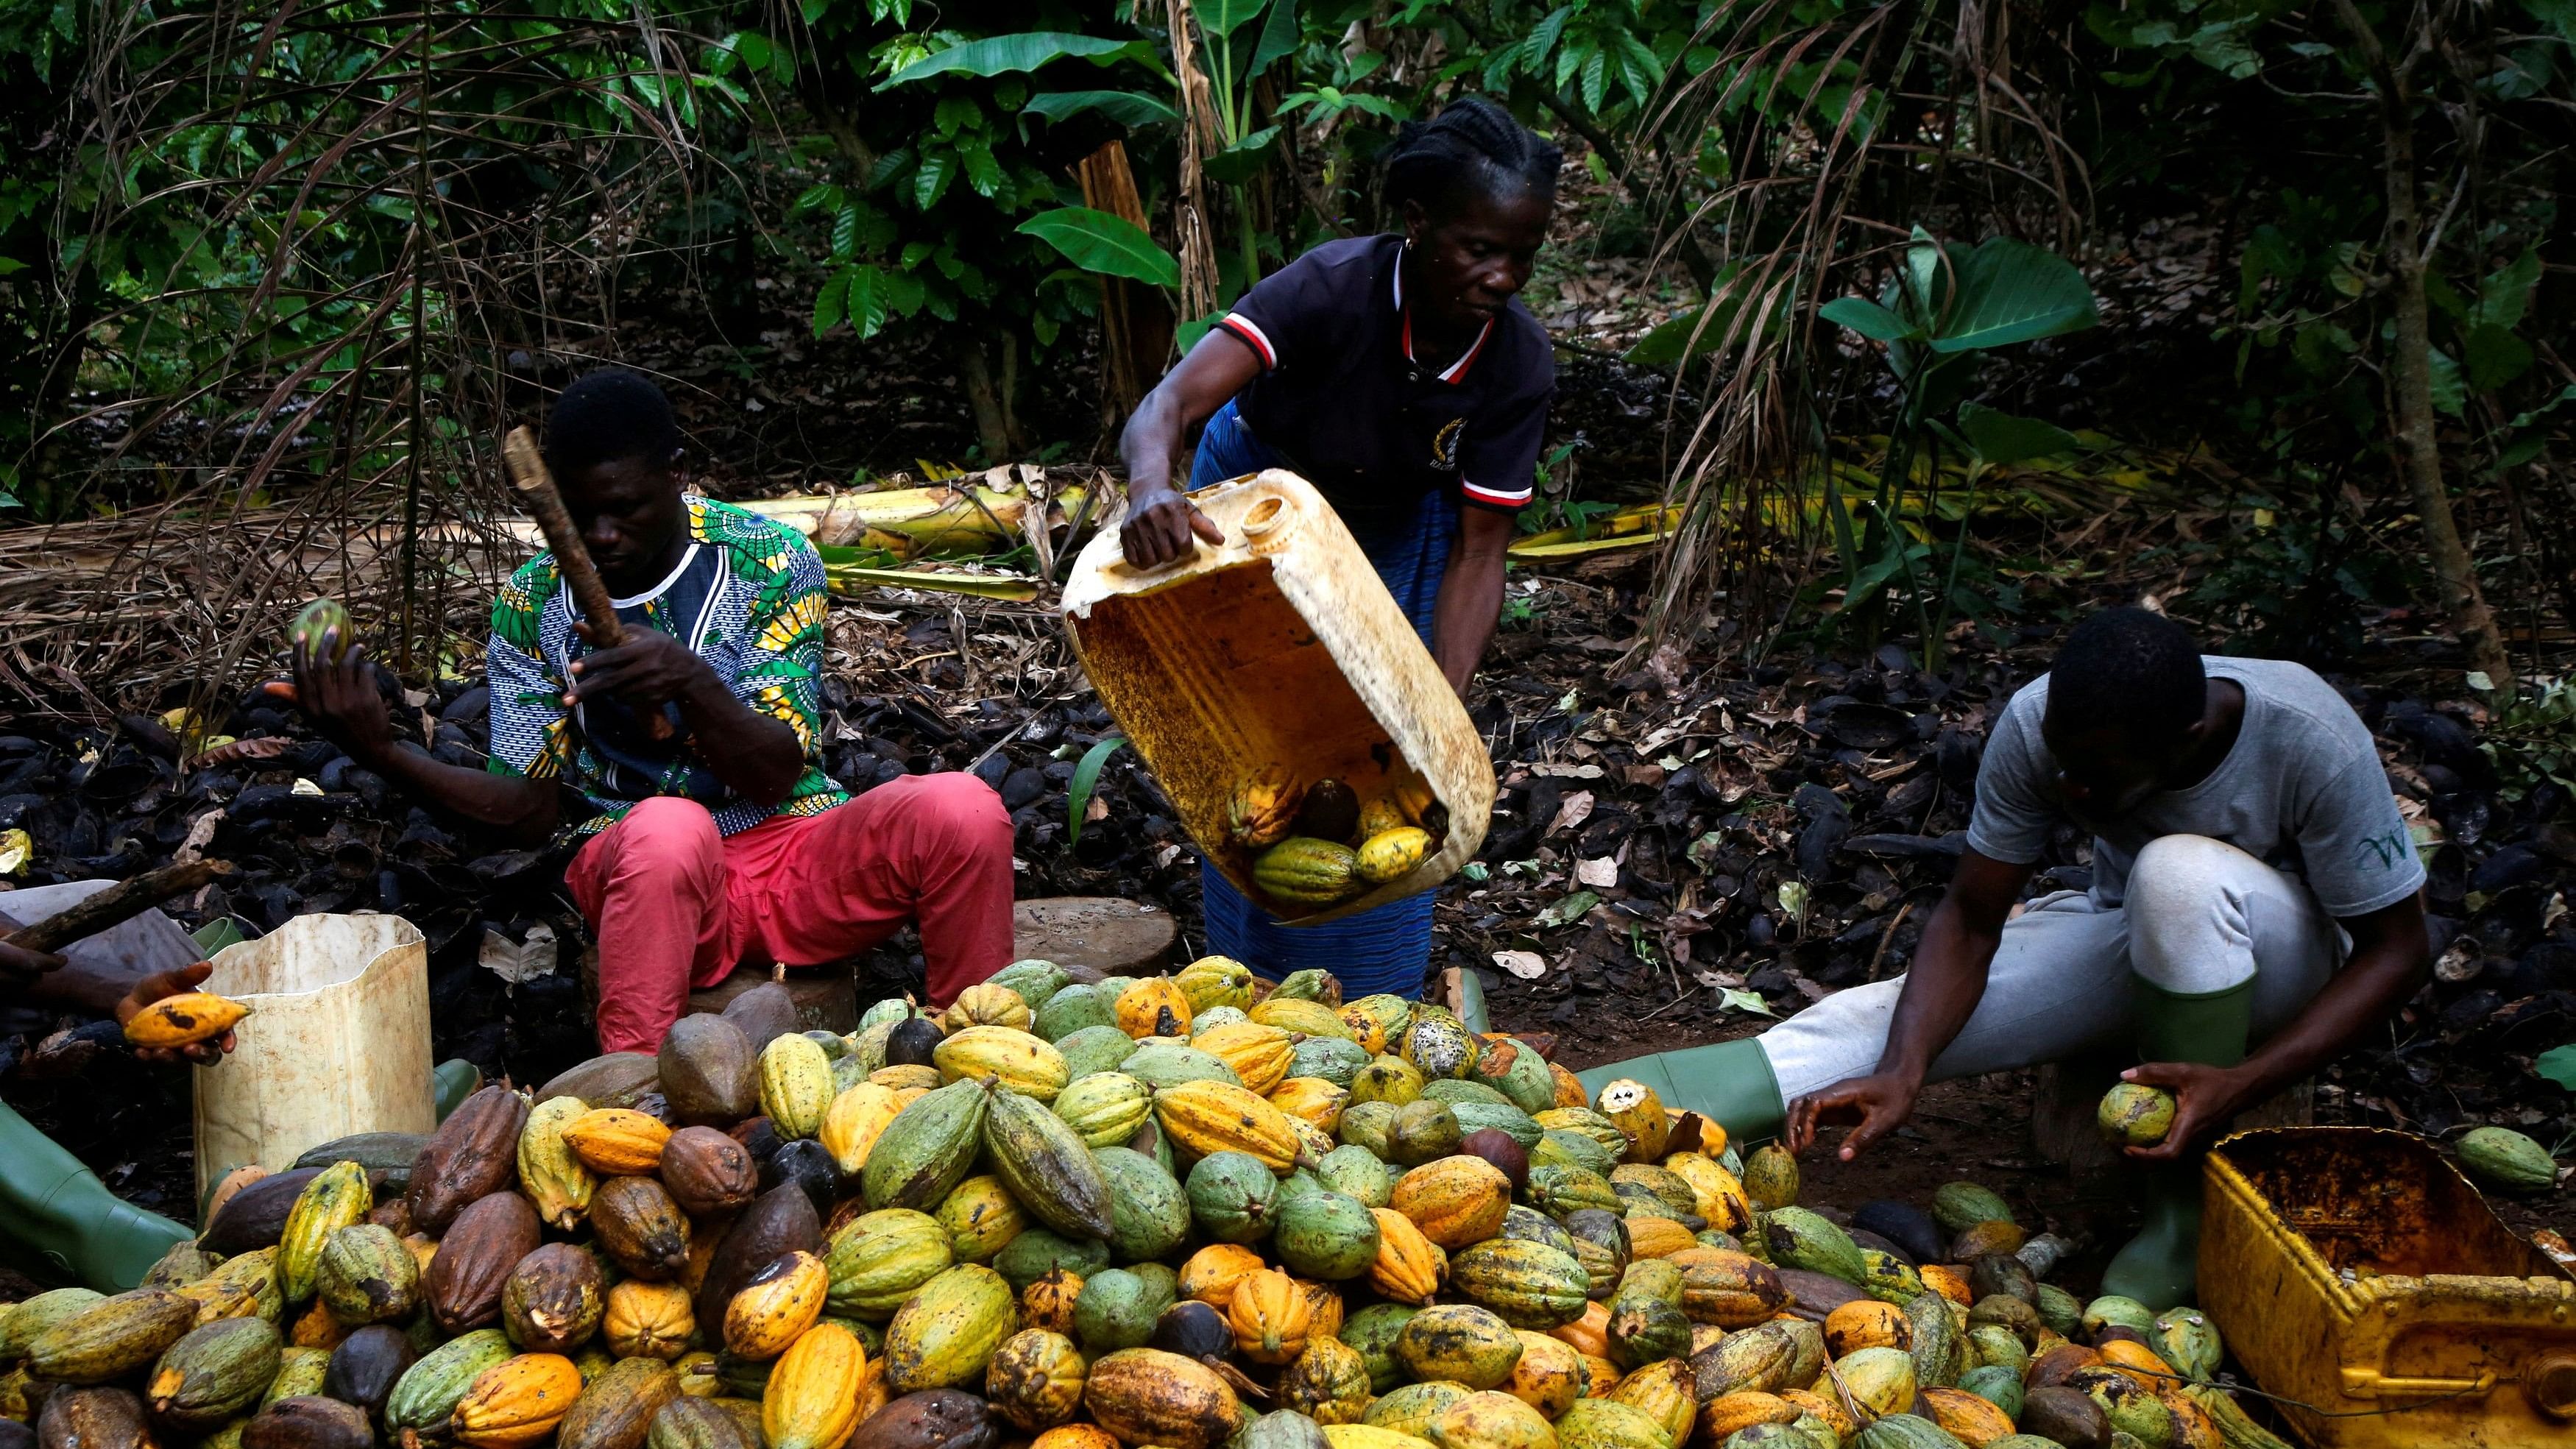 <div class="paragraphs"><p>Farmers break cocoa beans at a farm in Ivory Coast.</p></div>